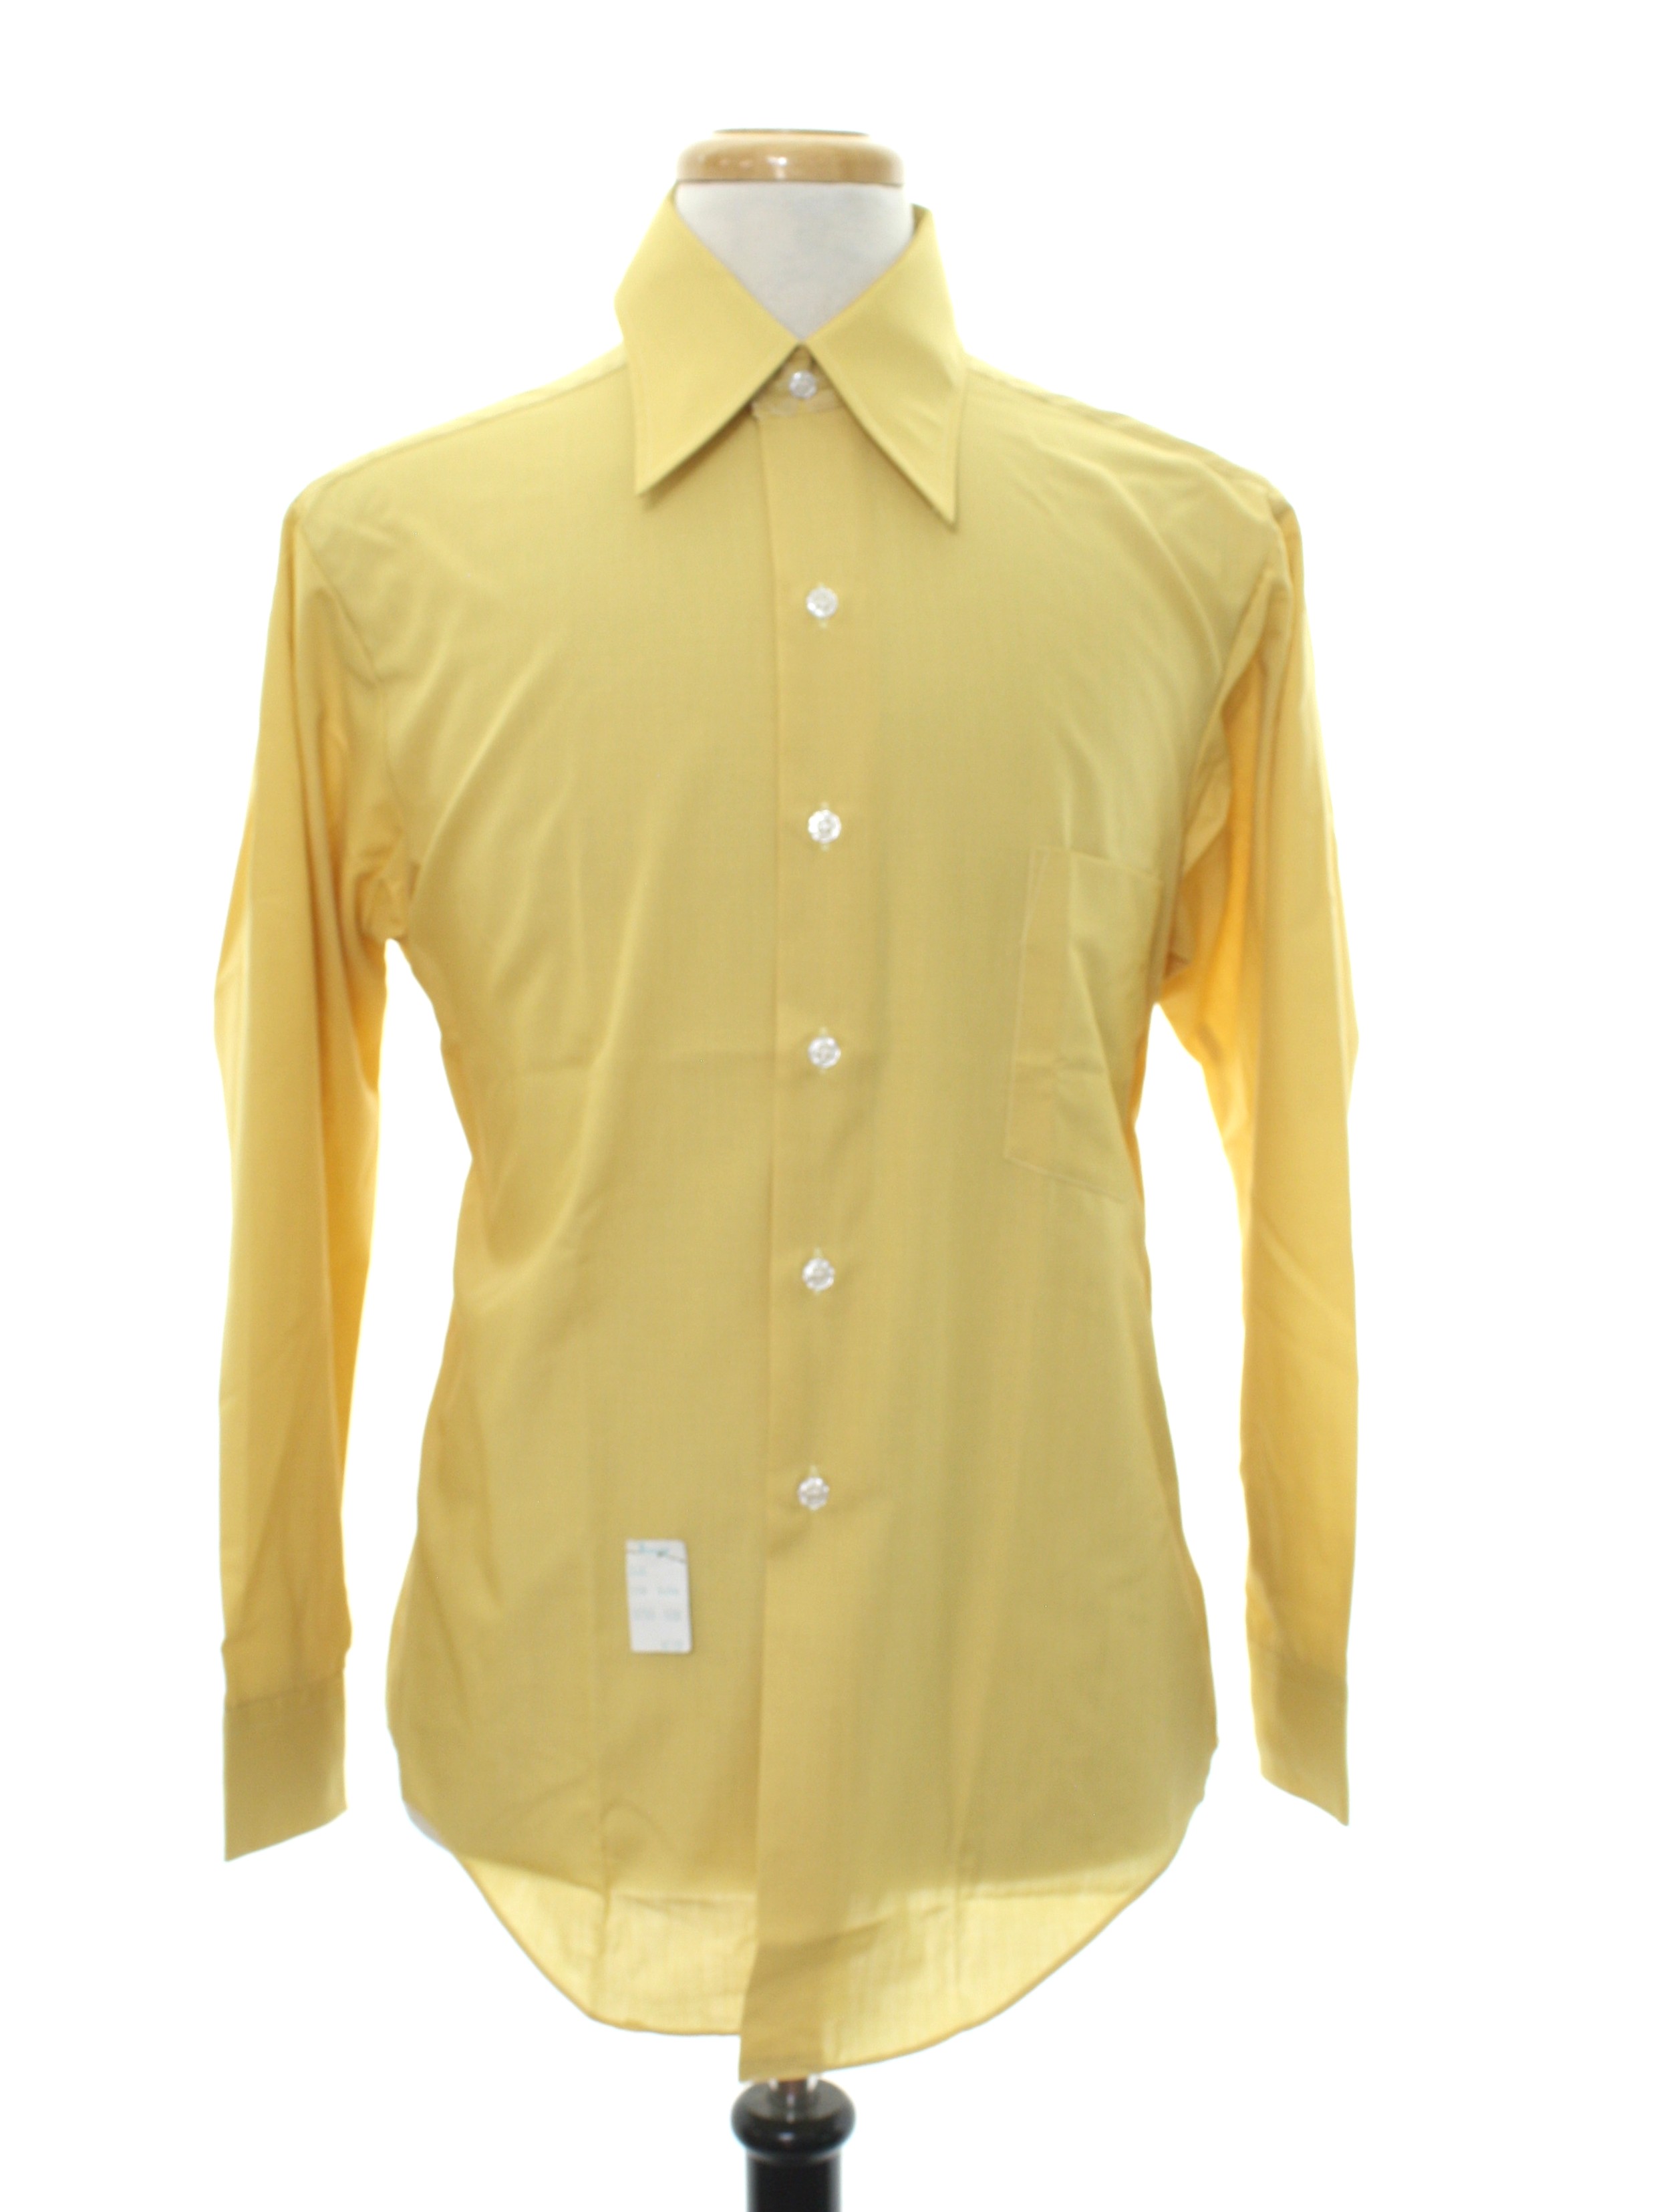 60s Retro Shirt: Late 60s -Penn-Prest, Penneys- Mens gold background ...